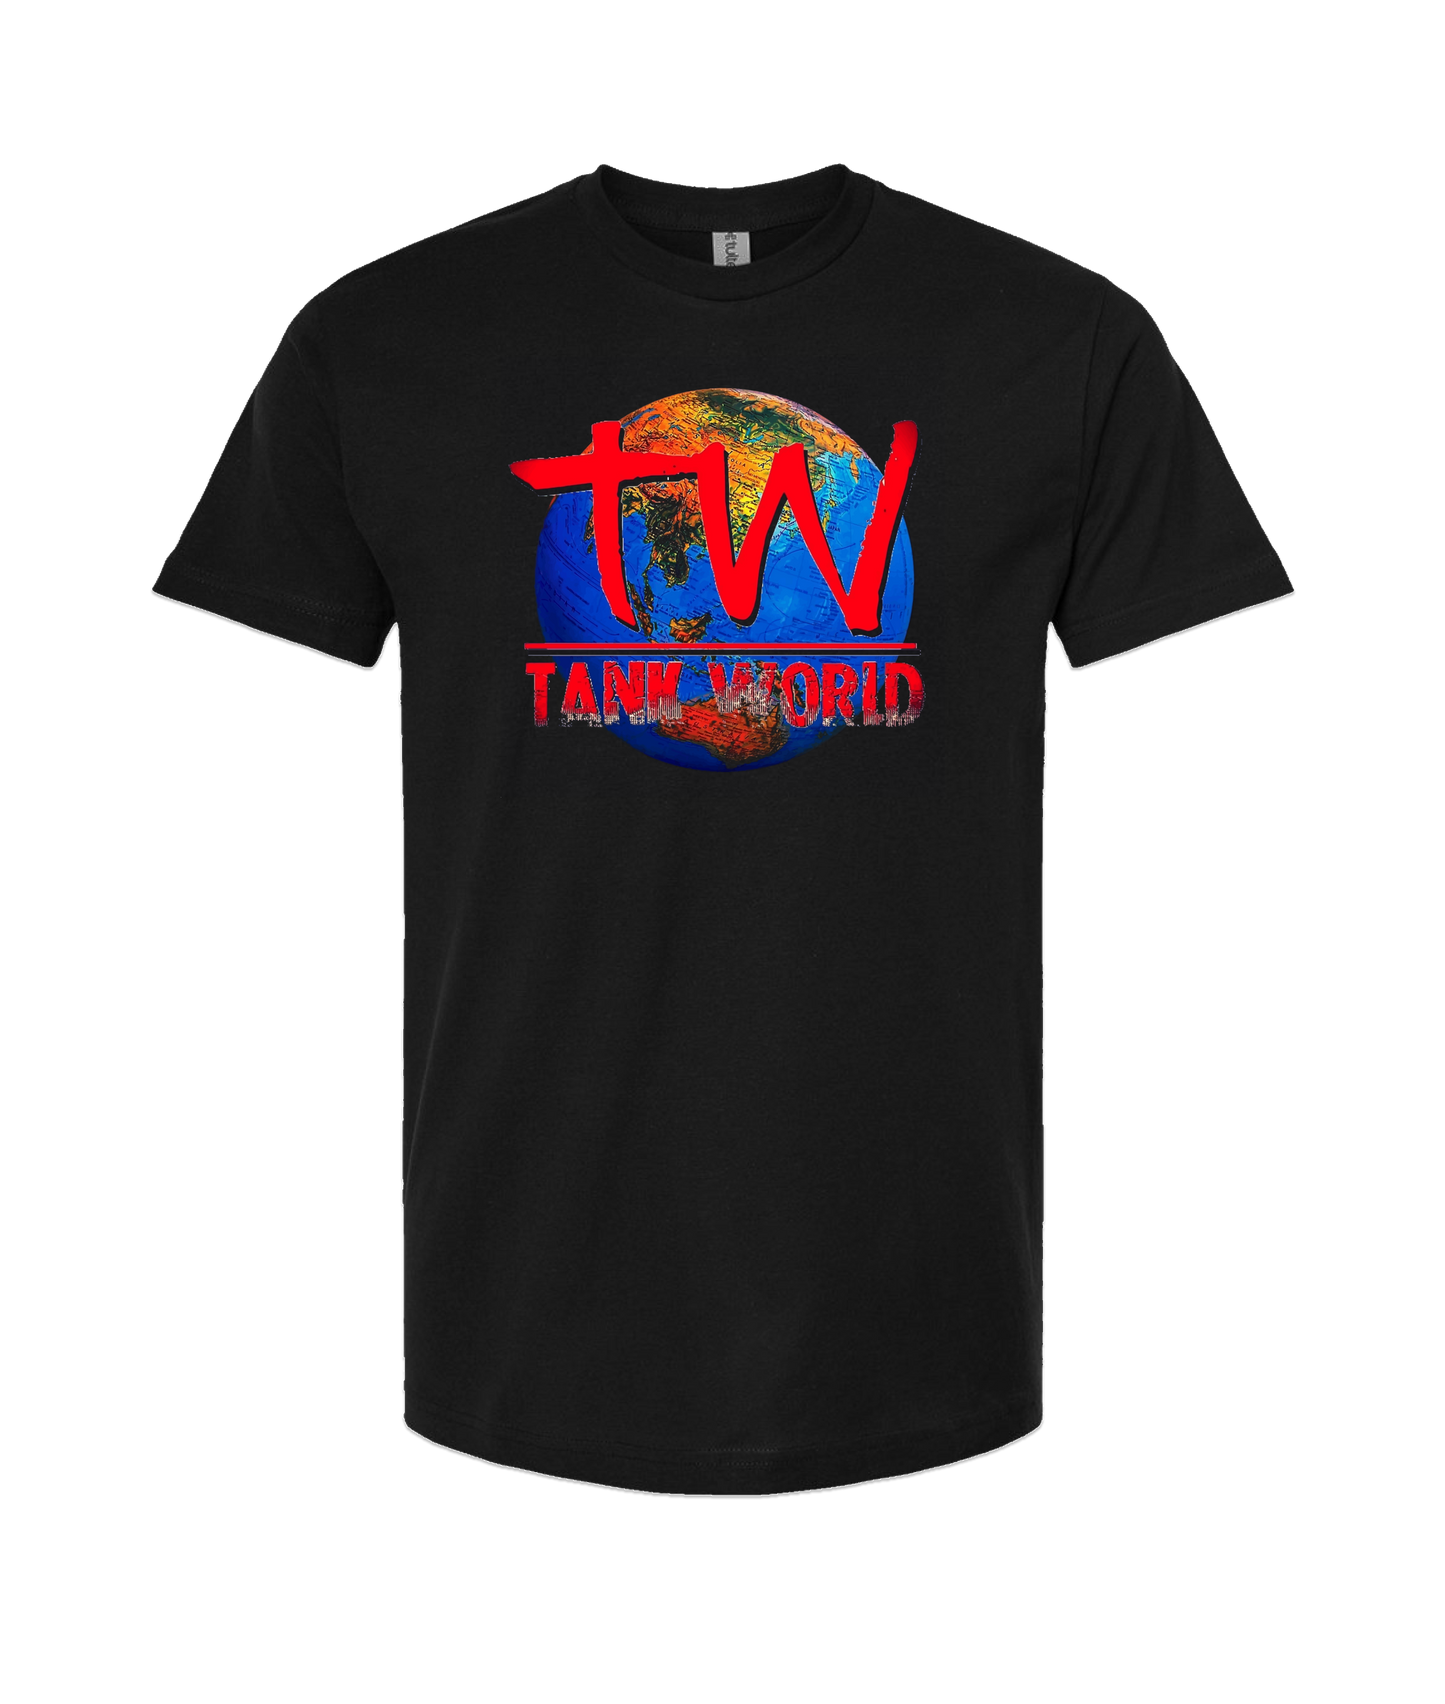 TANK WORLD/TEAMSTERS BOARD - Tank World - Black T-Shirt